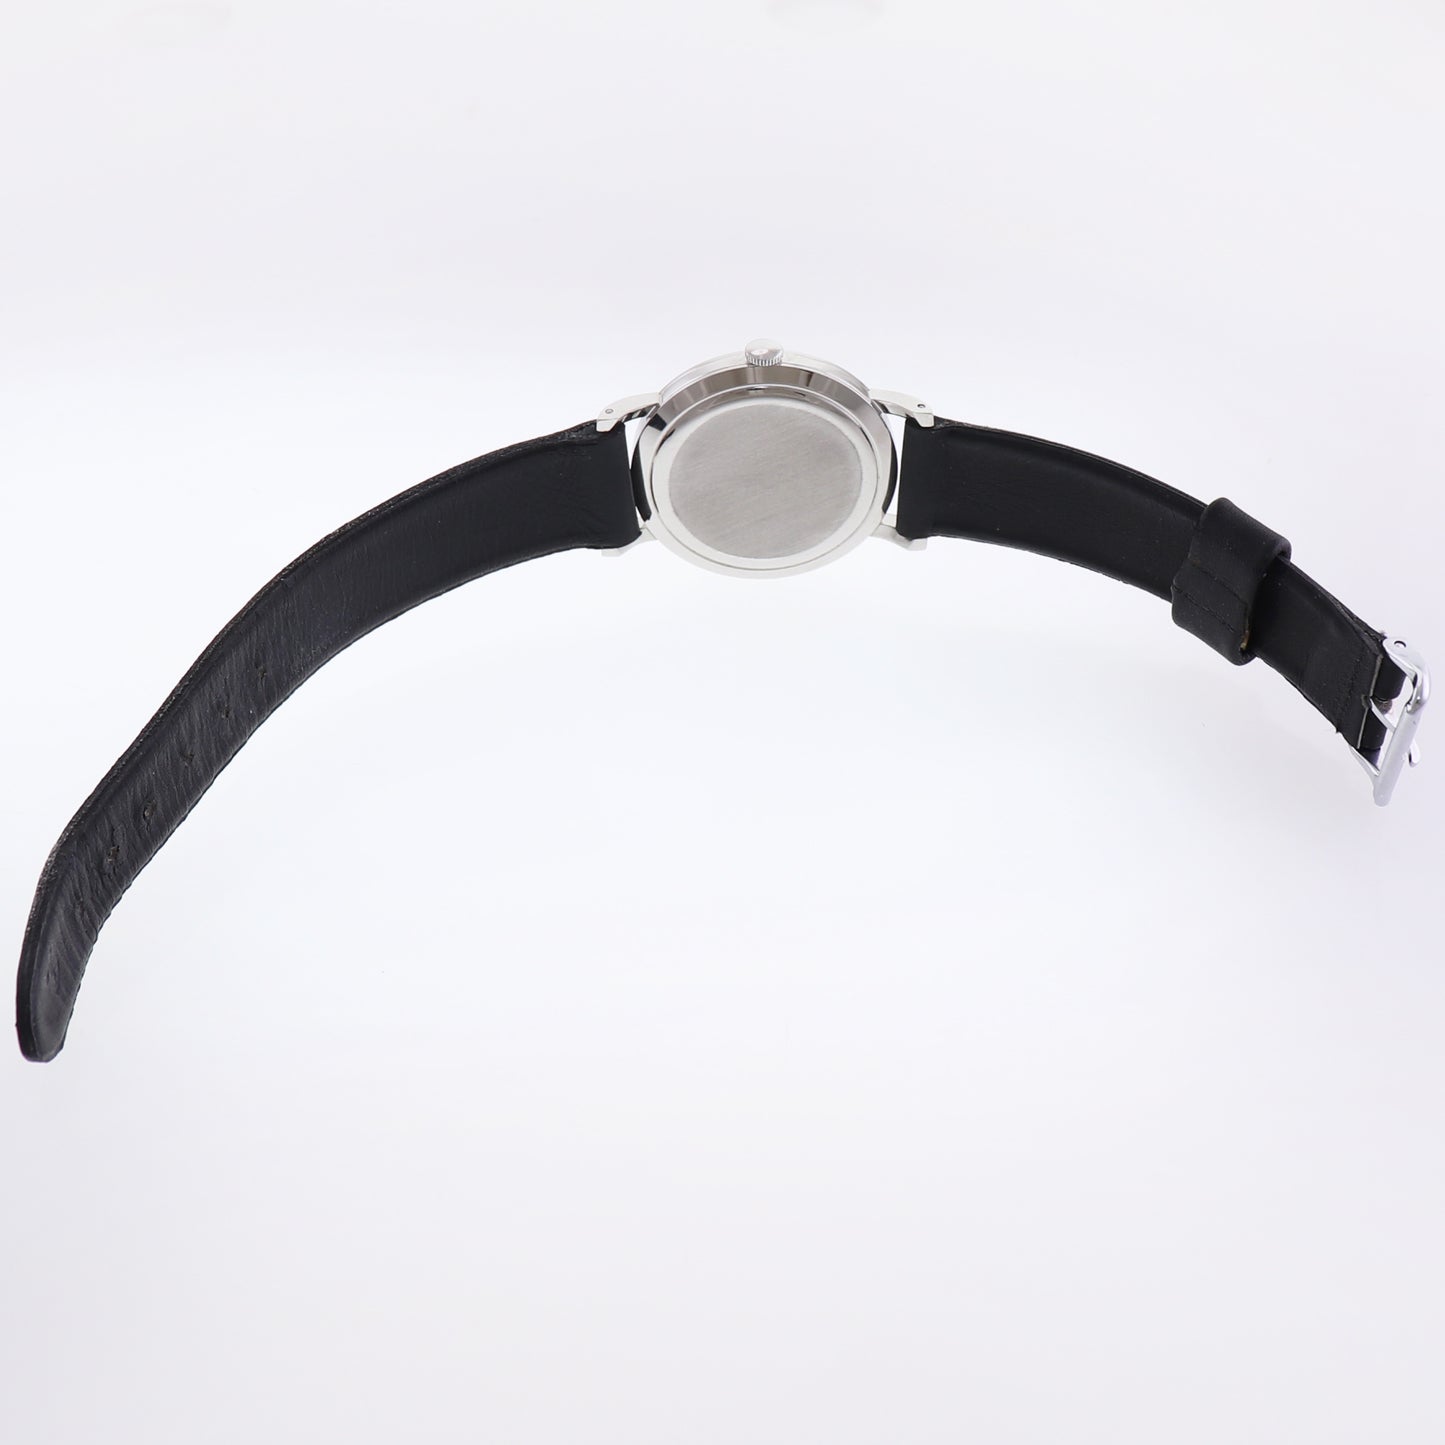 Vintage 1960's IWC Schaffhausen Ref. 527 35mm Manual Wind Cal. 89 Silver Dial Steel Dress Watch